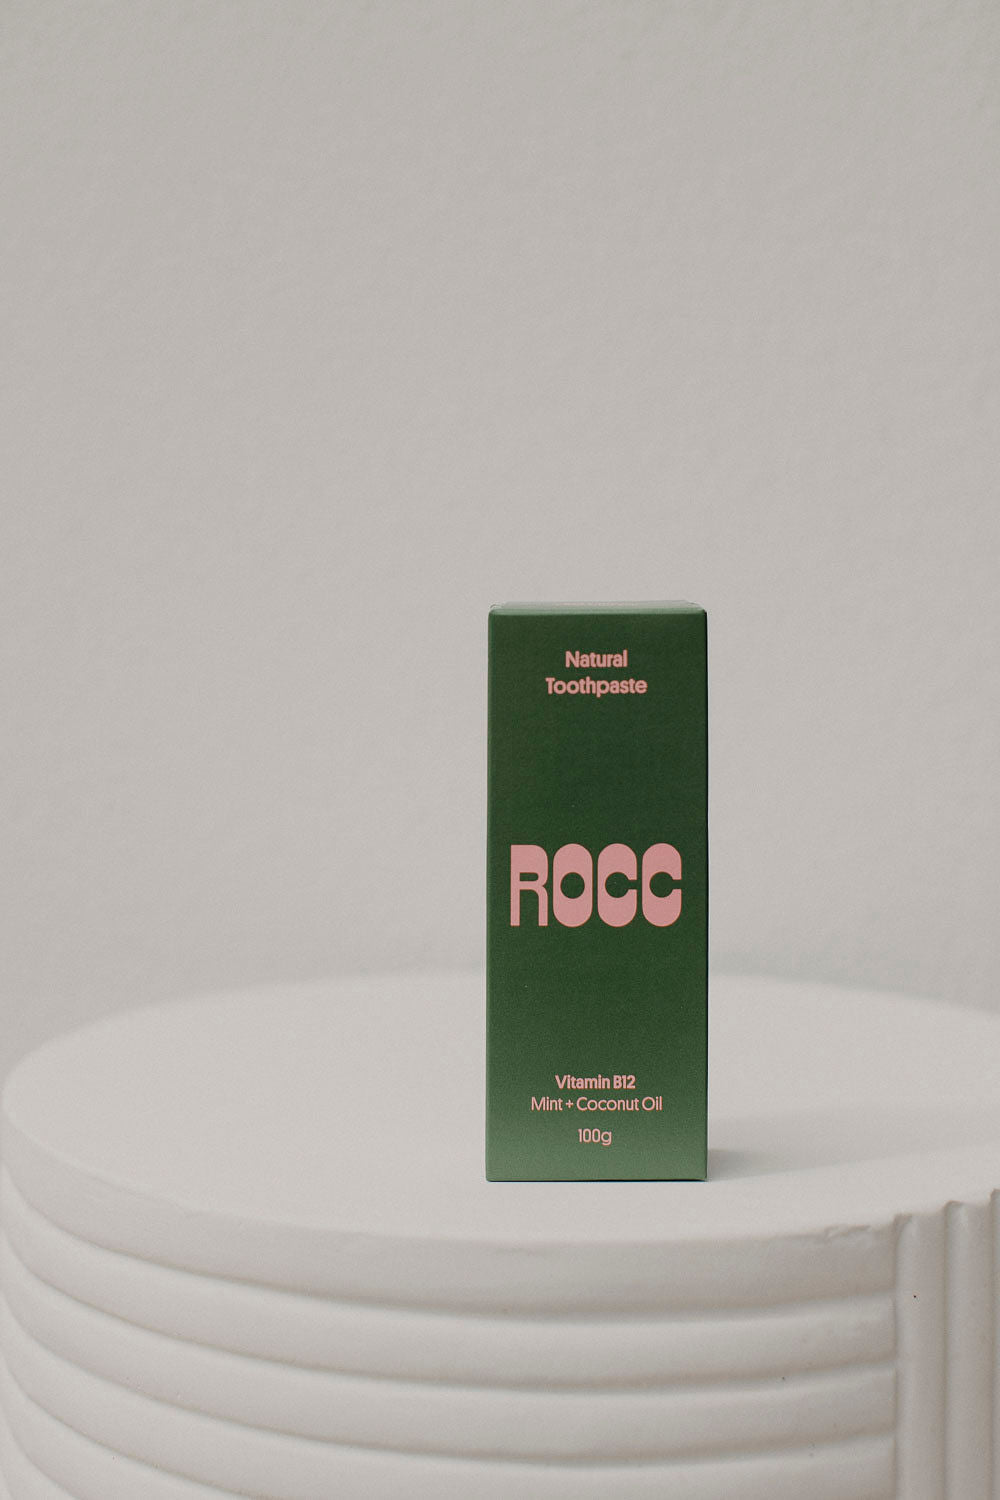 Rocc Naturals Toothpaste 100g - Vitamin B12 + Coconut Oil